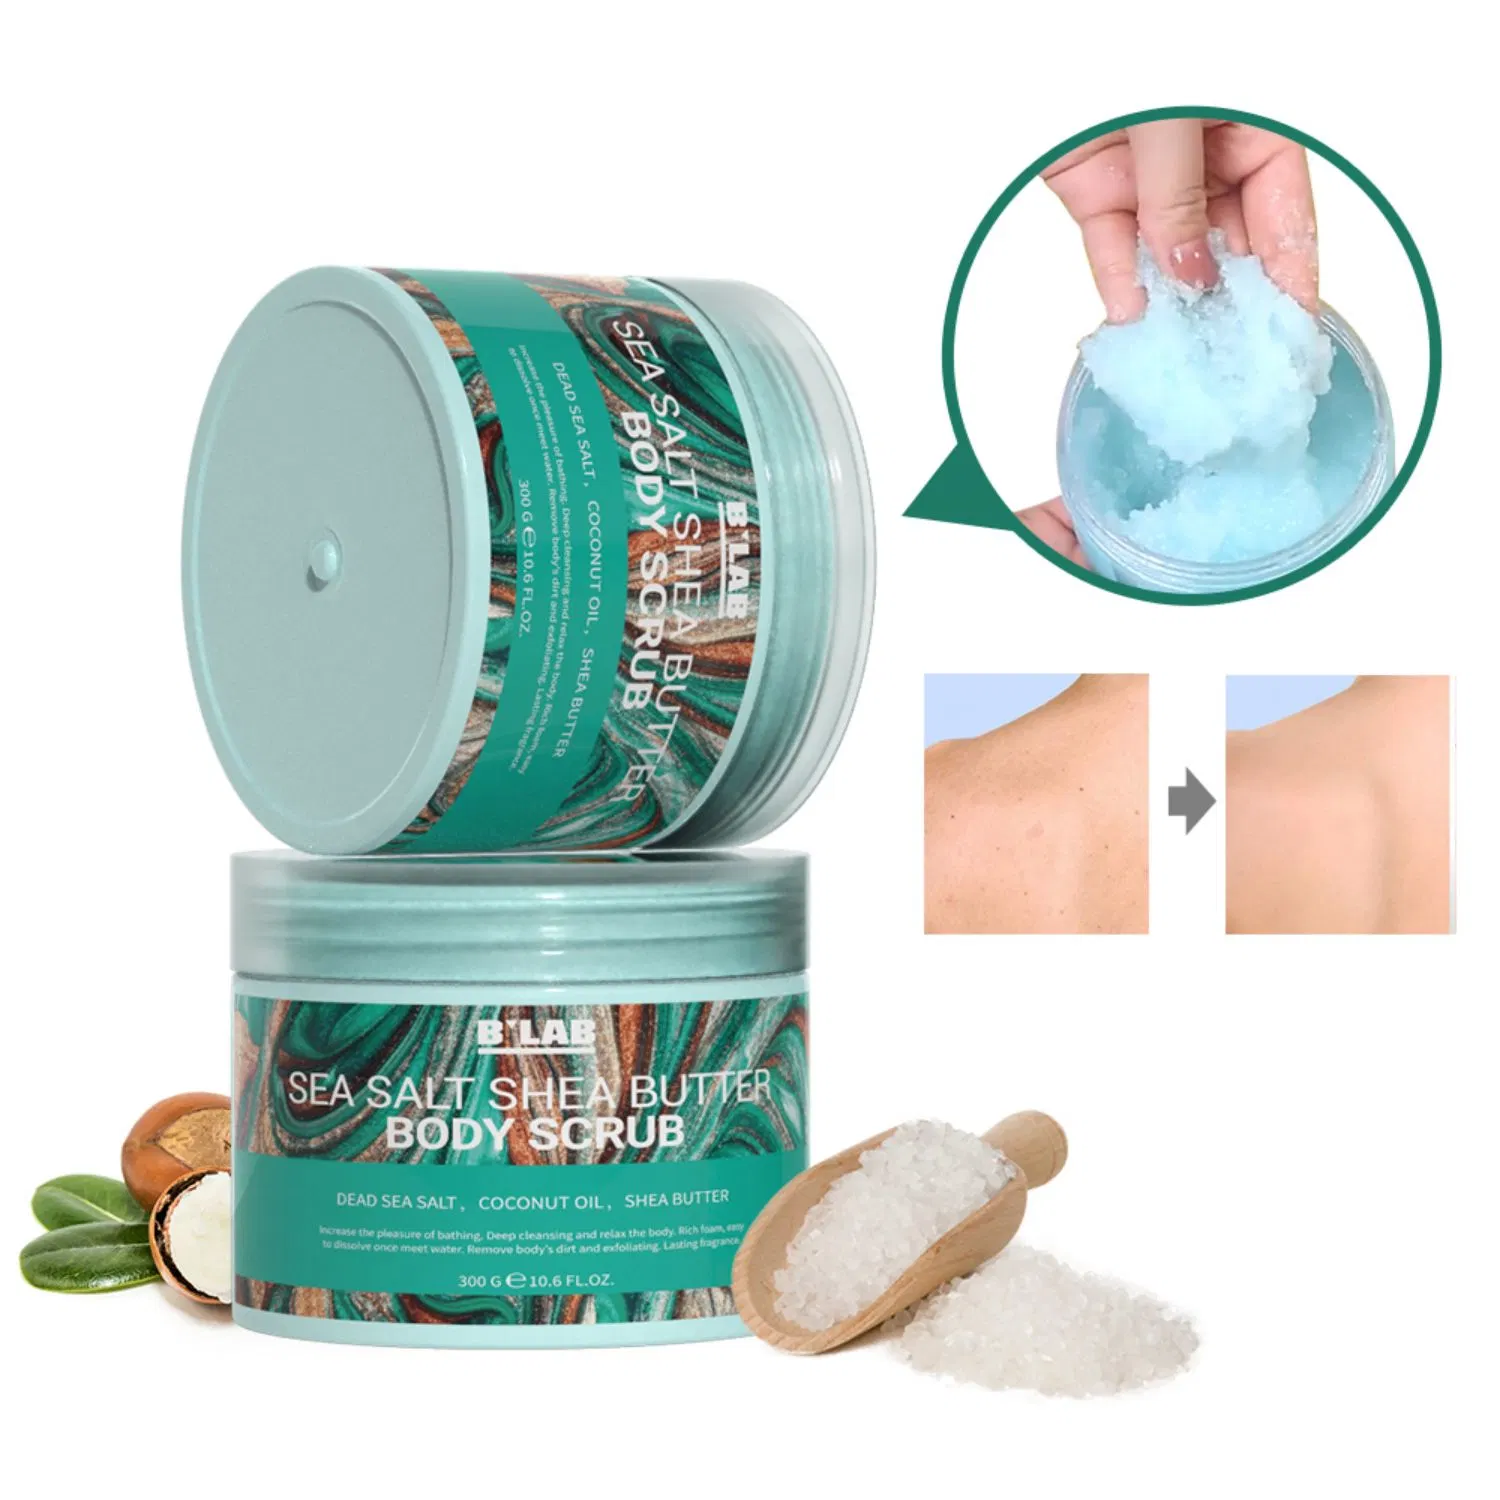 Wholesale Natural Skin Care Products Bath Skin Scrubs Sea Salt Shea Butter Body Scrub